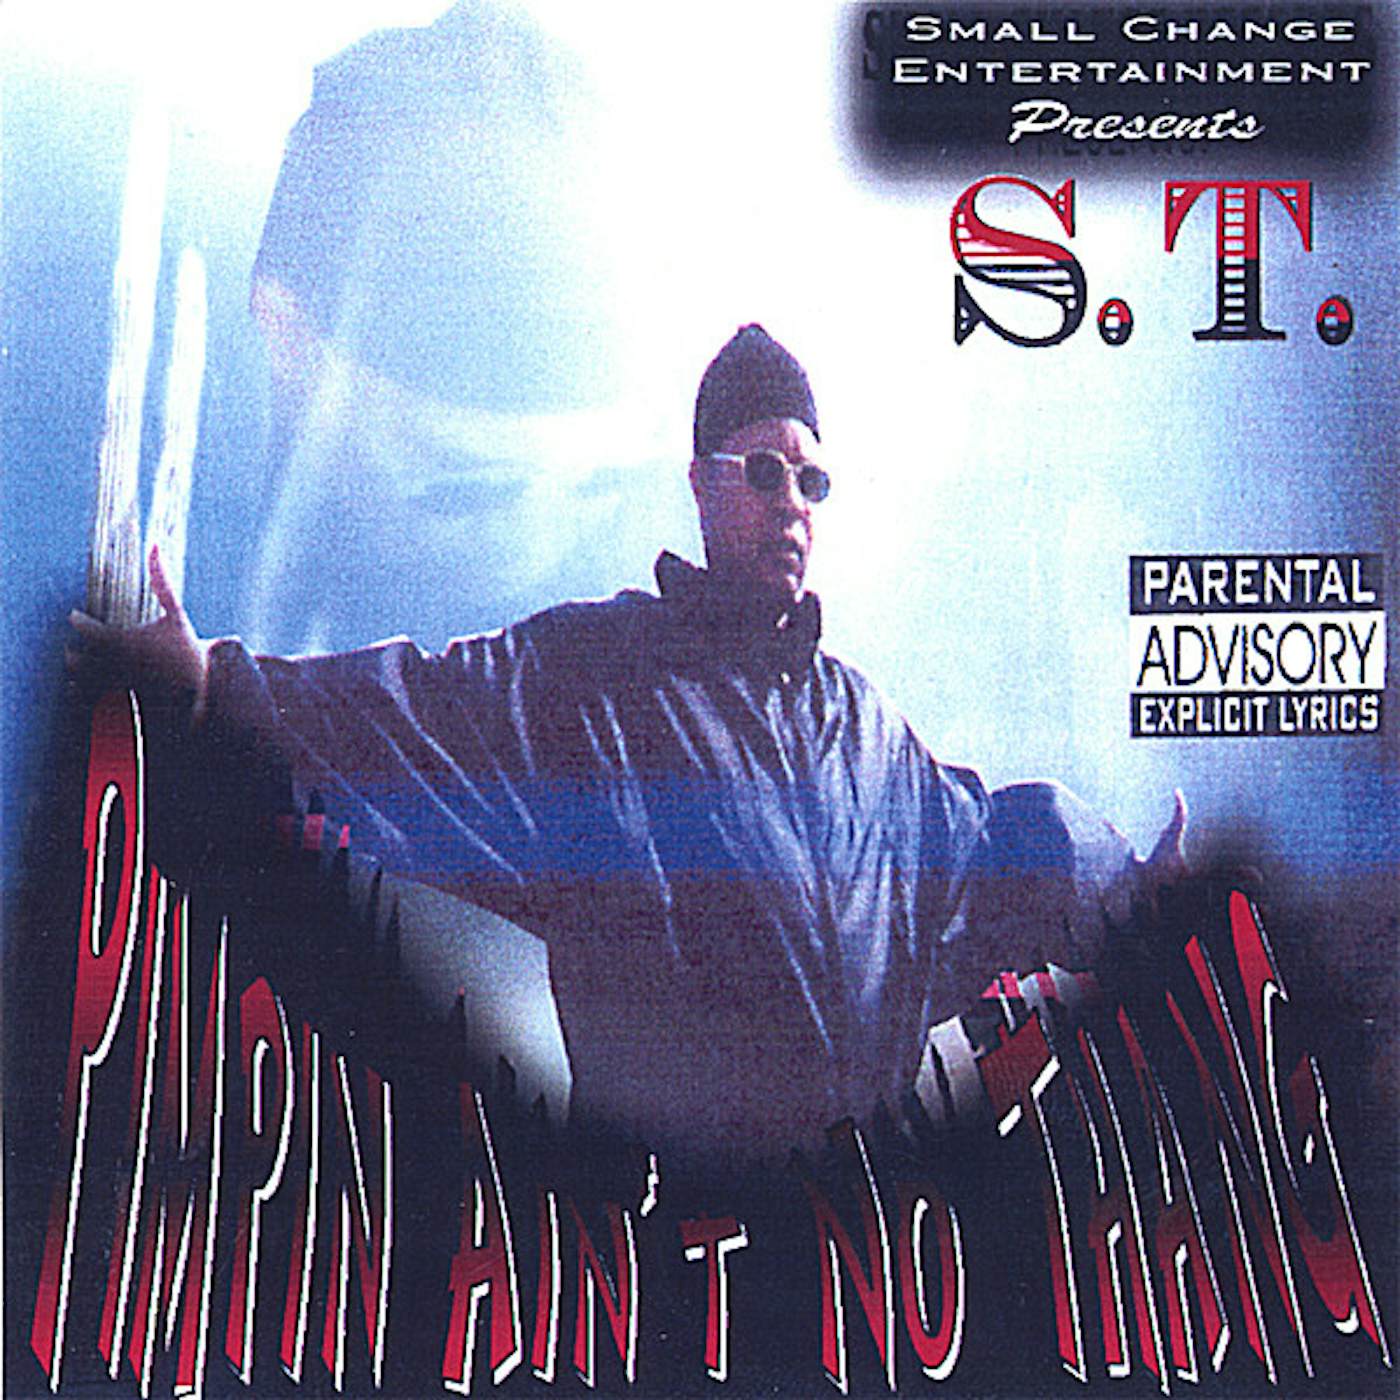 S.T. PIMPIN' AIN'T NO THANG CD